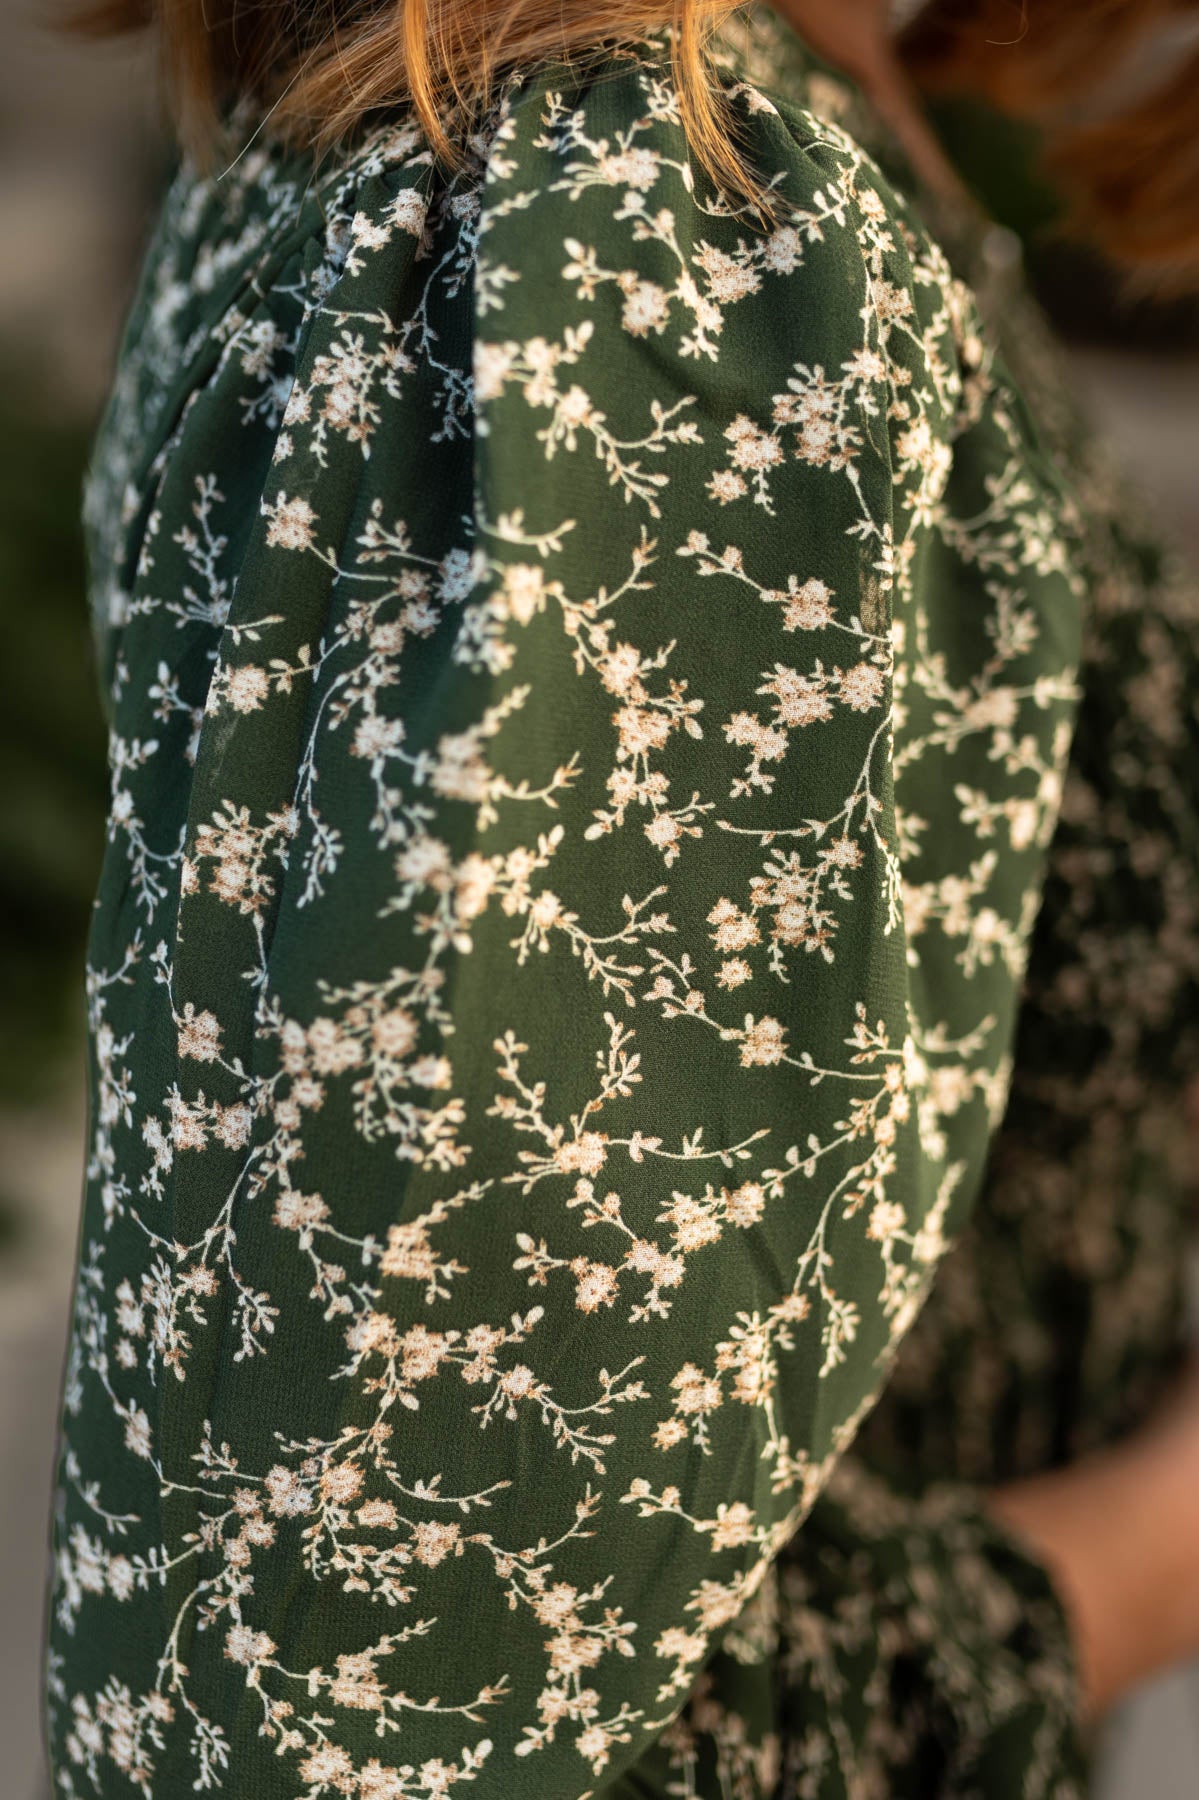 Floral pattern of a dark green dress